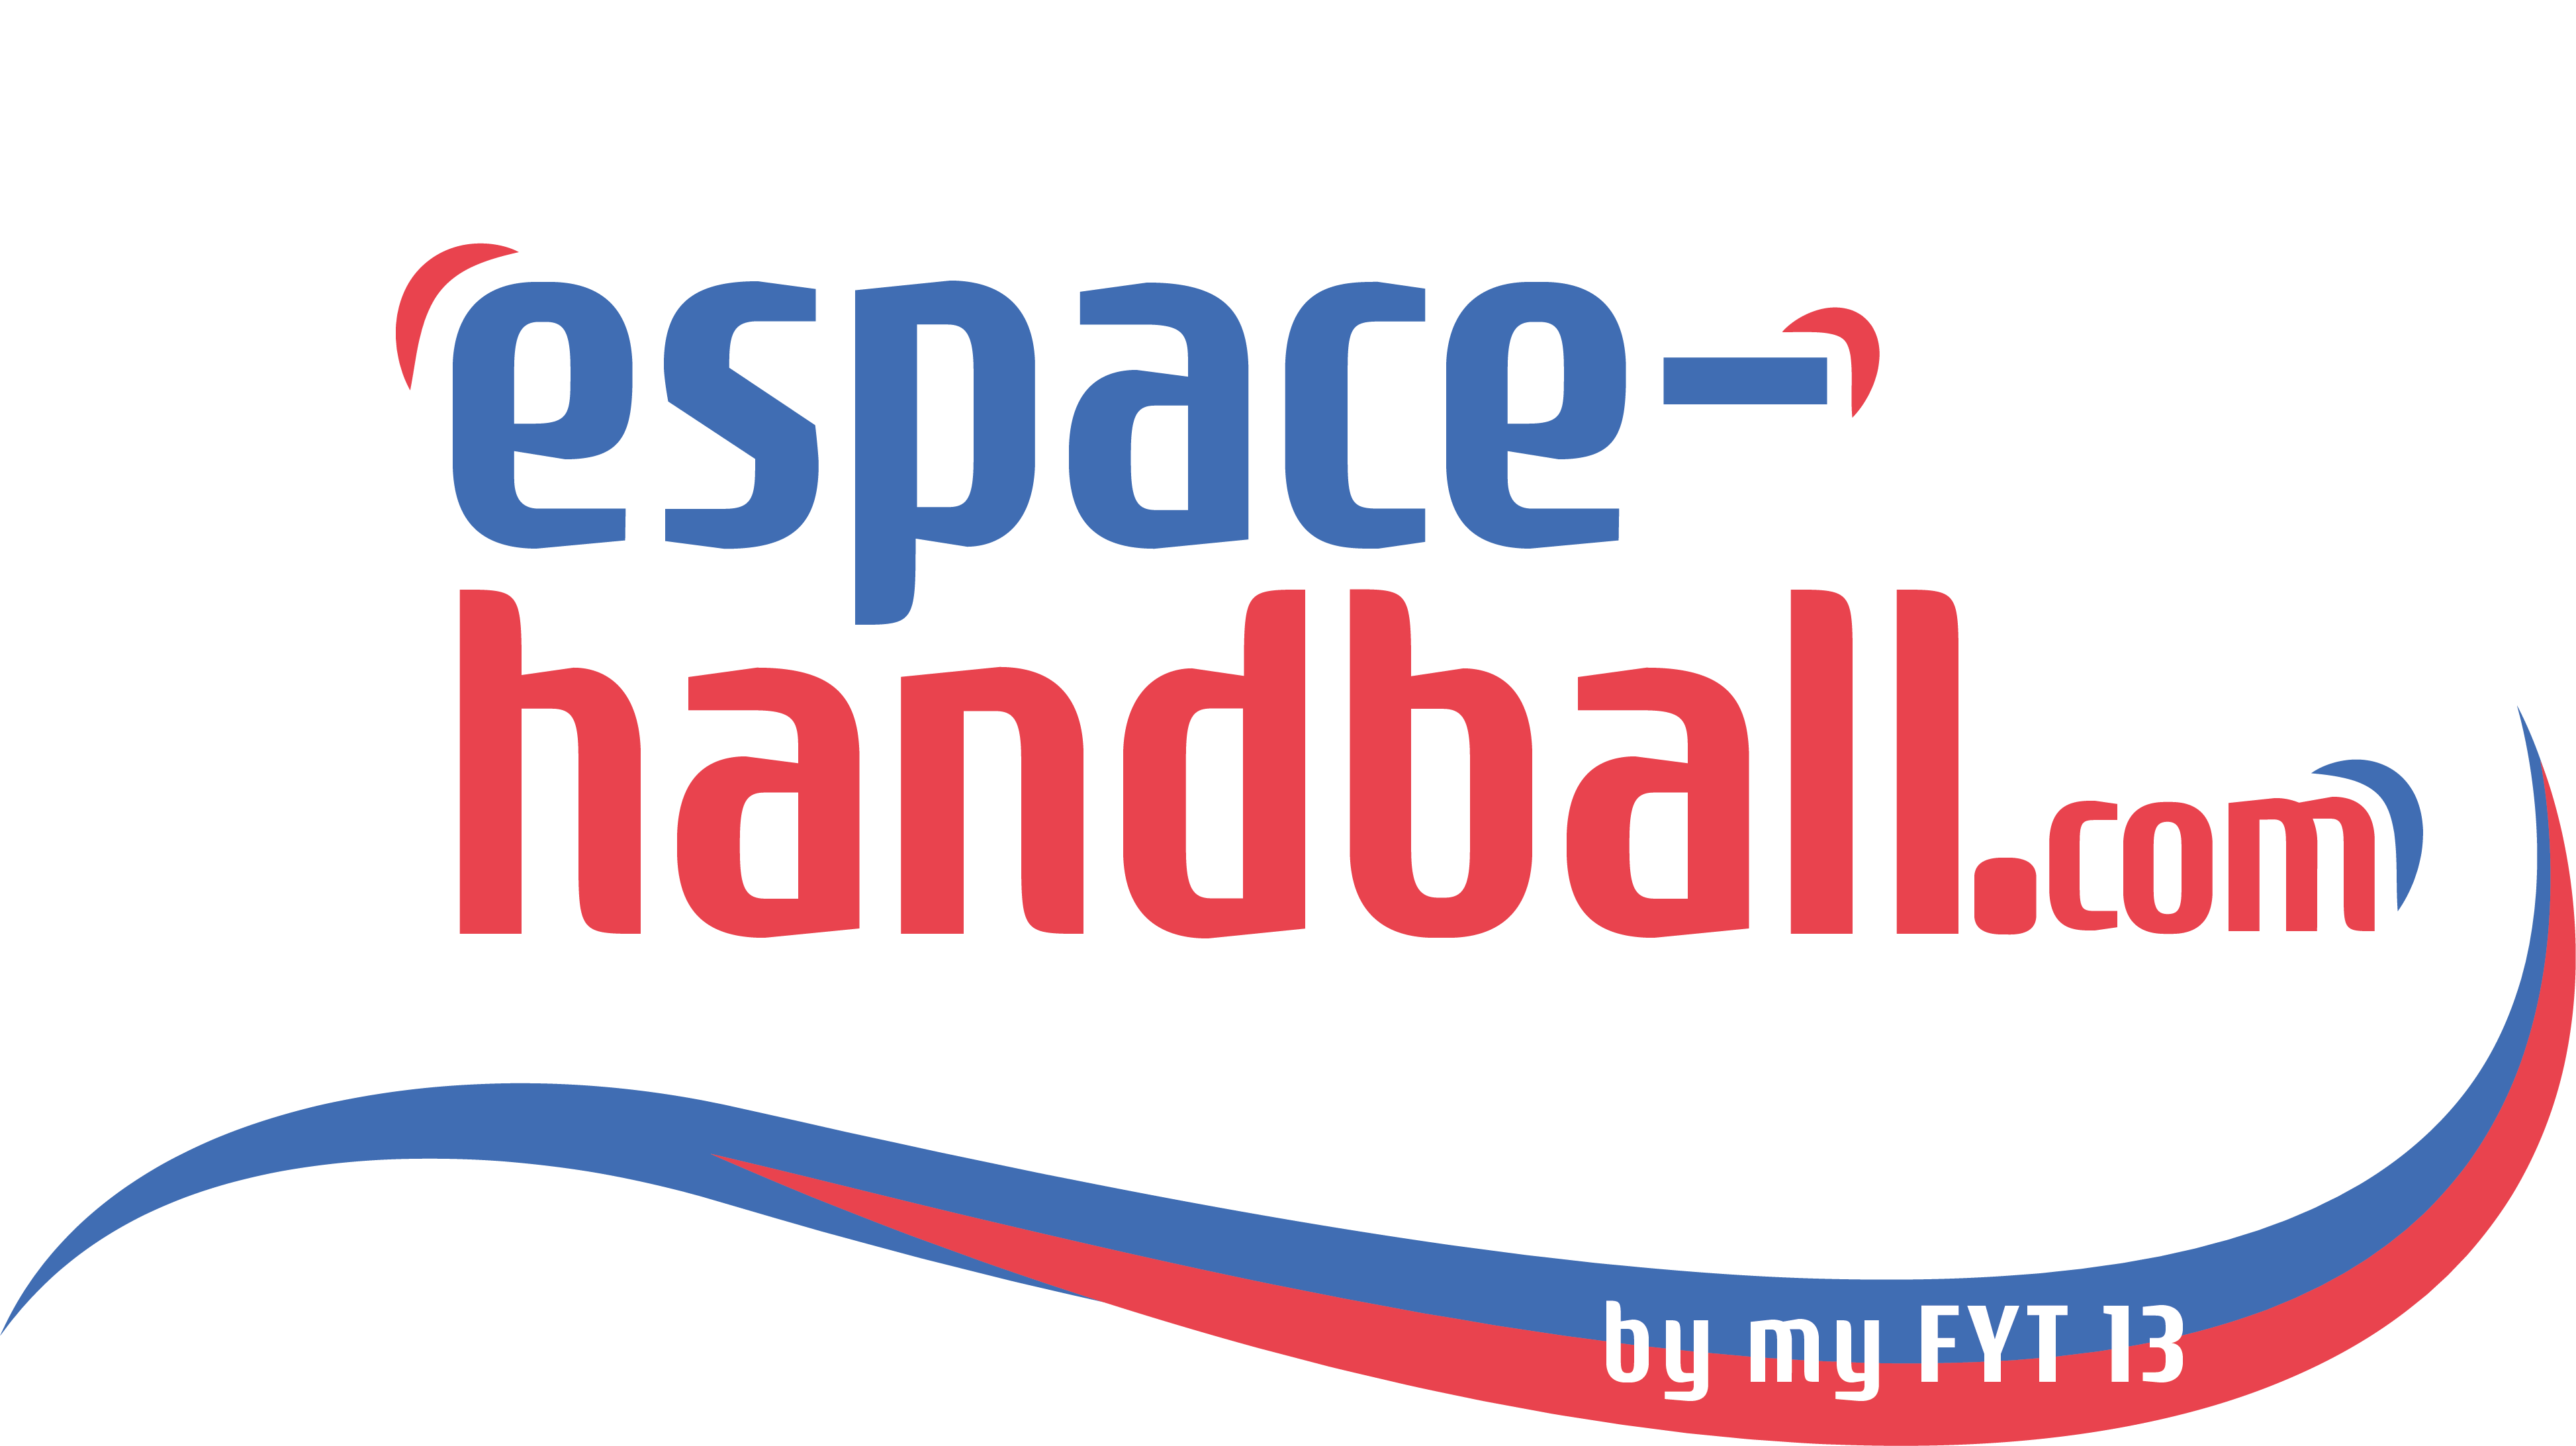 Espace-Handball.com | La plus grande boutique Handball de France